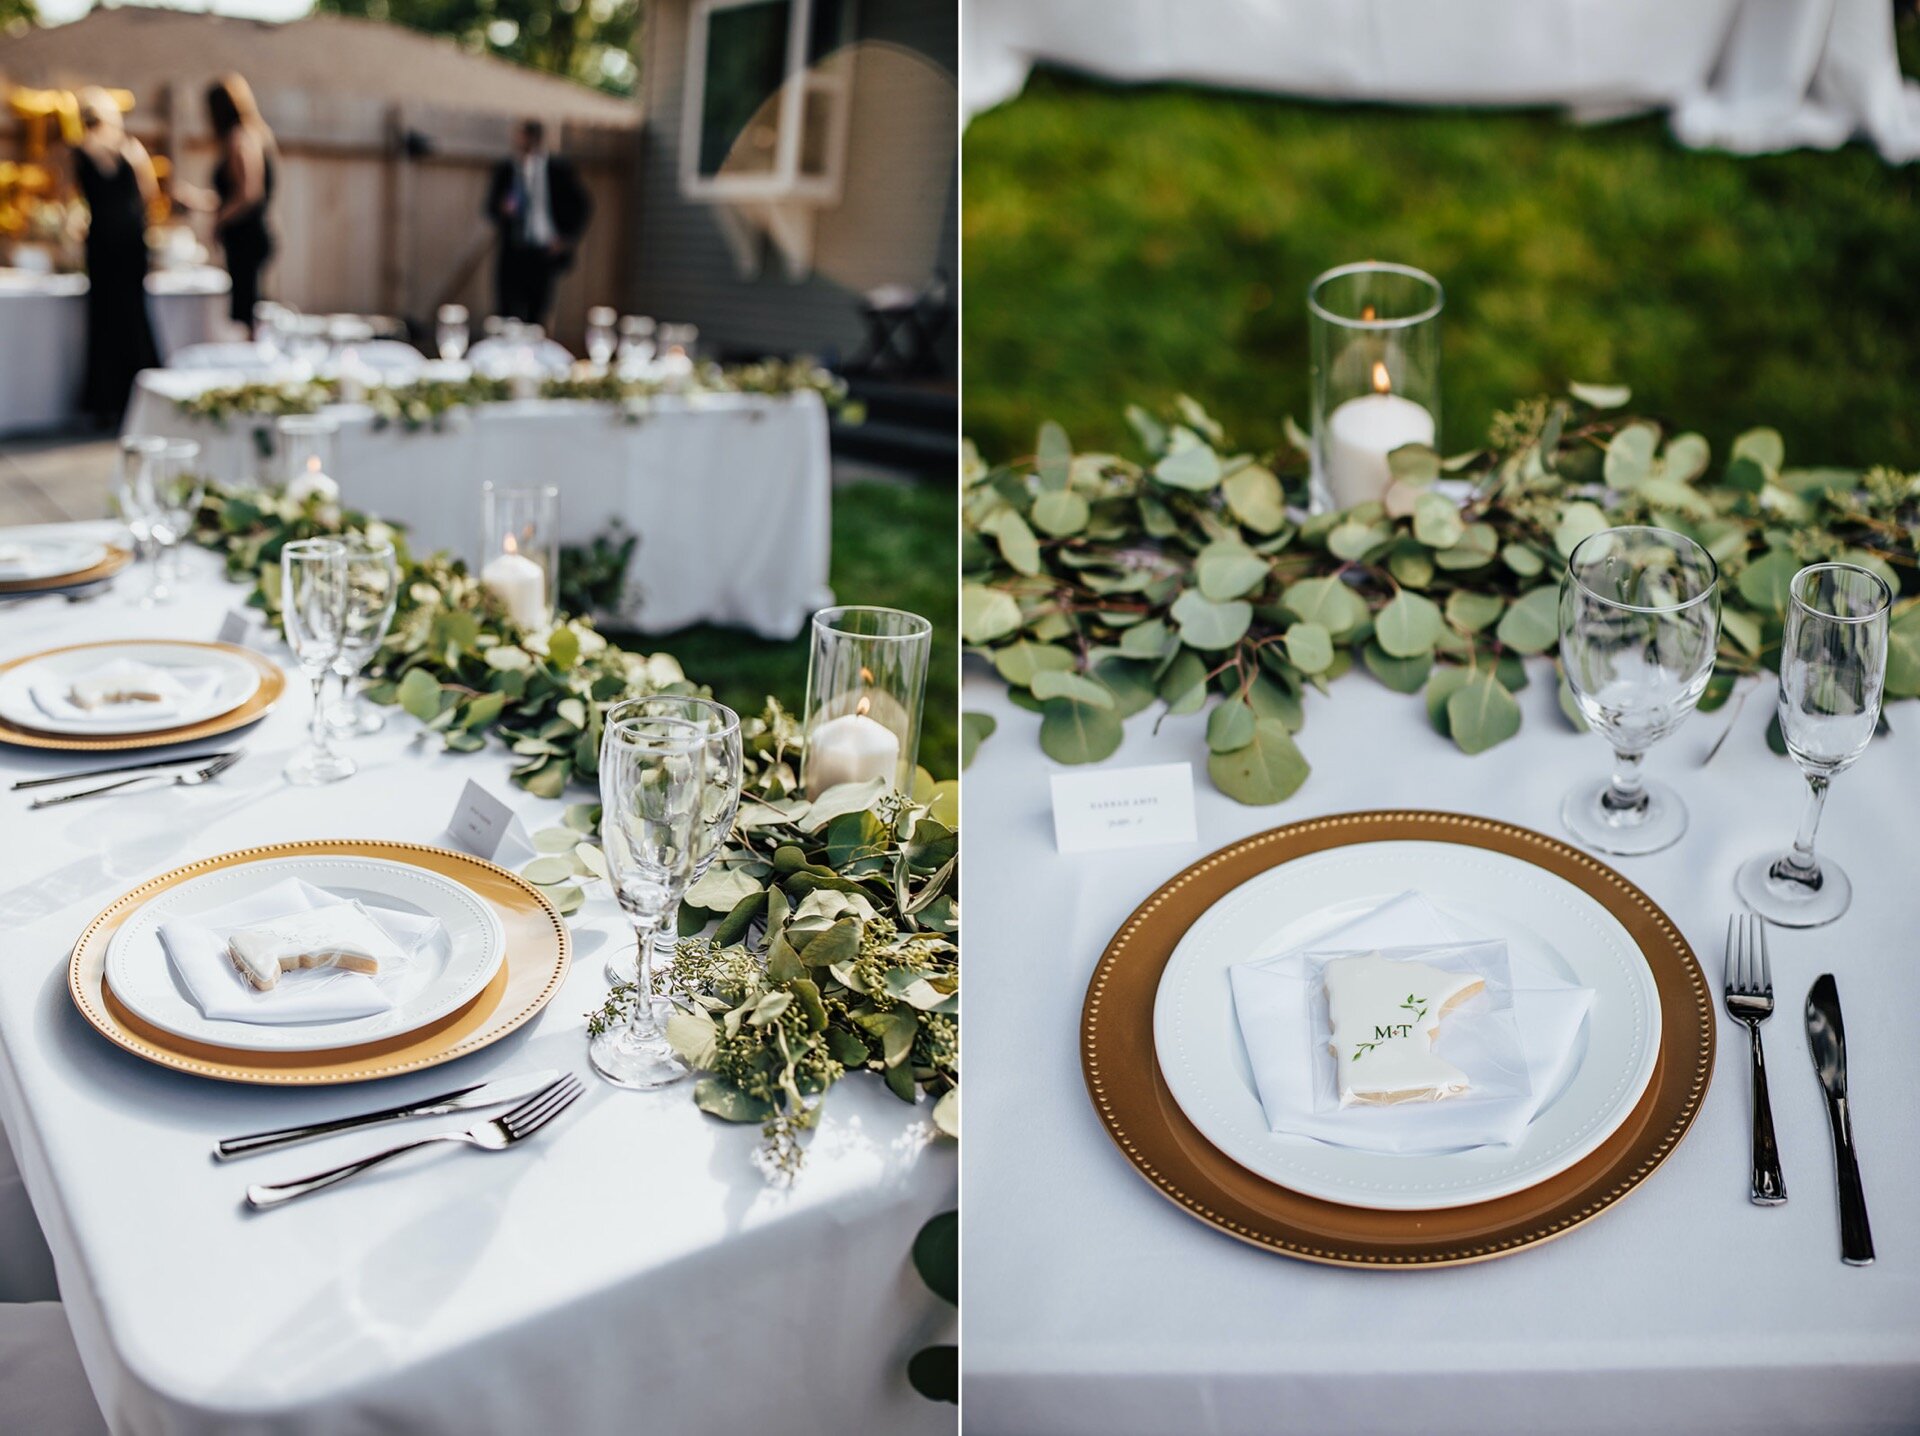 Brianna Lane Photography | Minne Floral Co. | Backyard Wedding